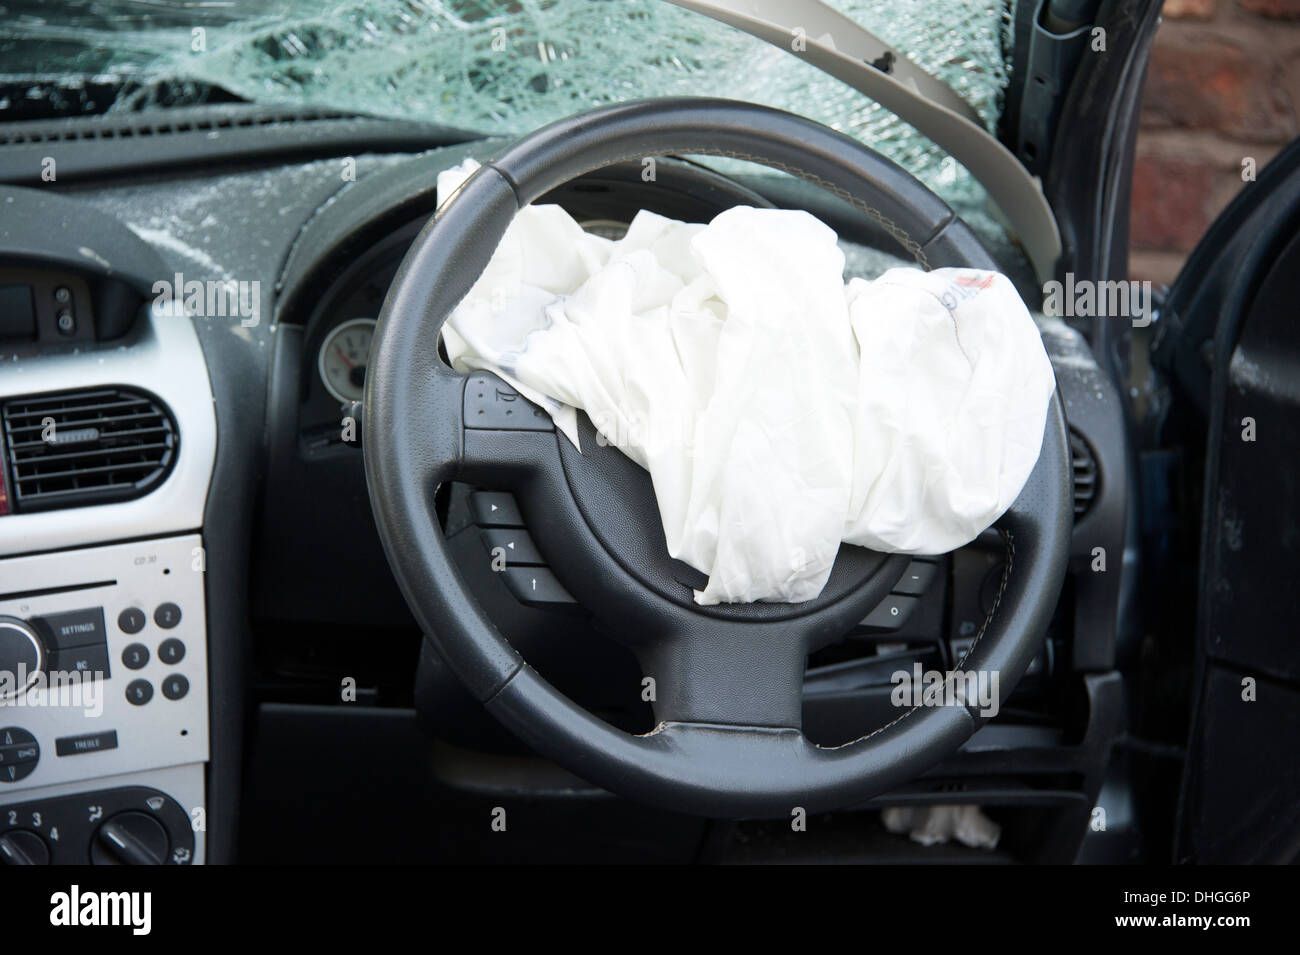 car Crash airbag air bag deployed gone off smashed screen Stock Photo